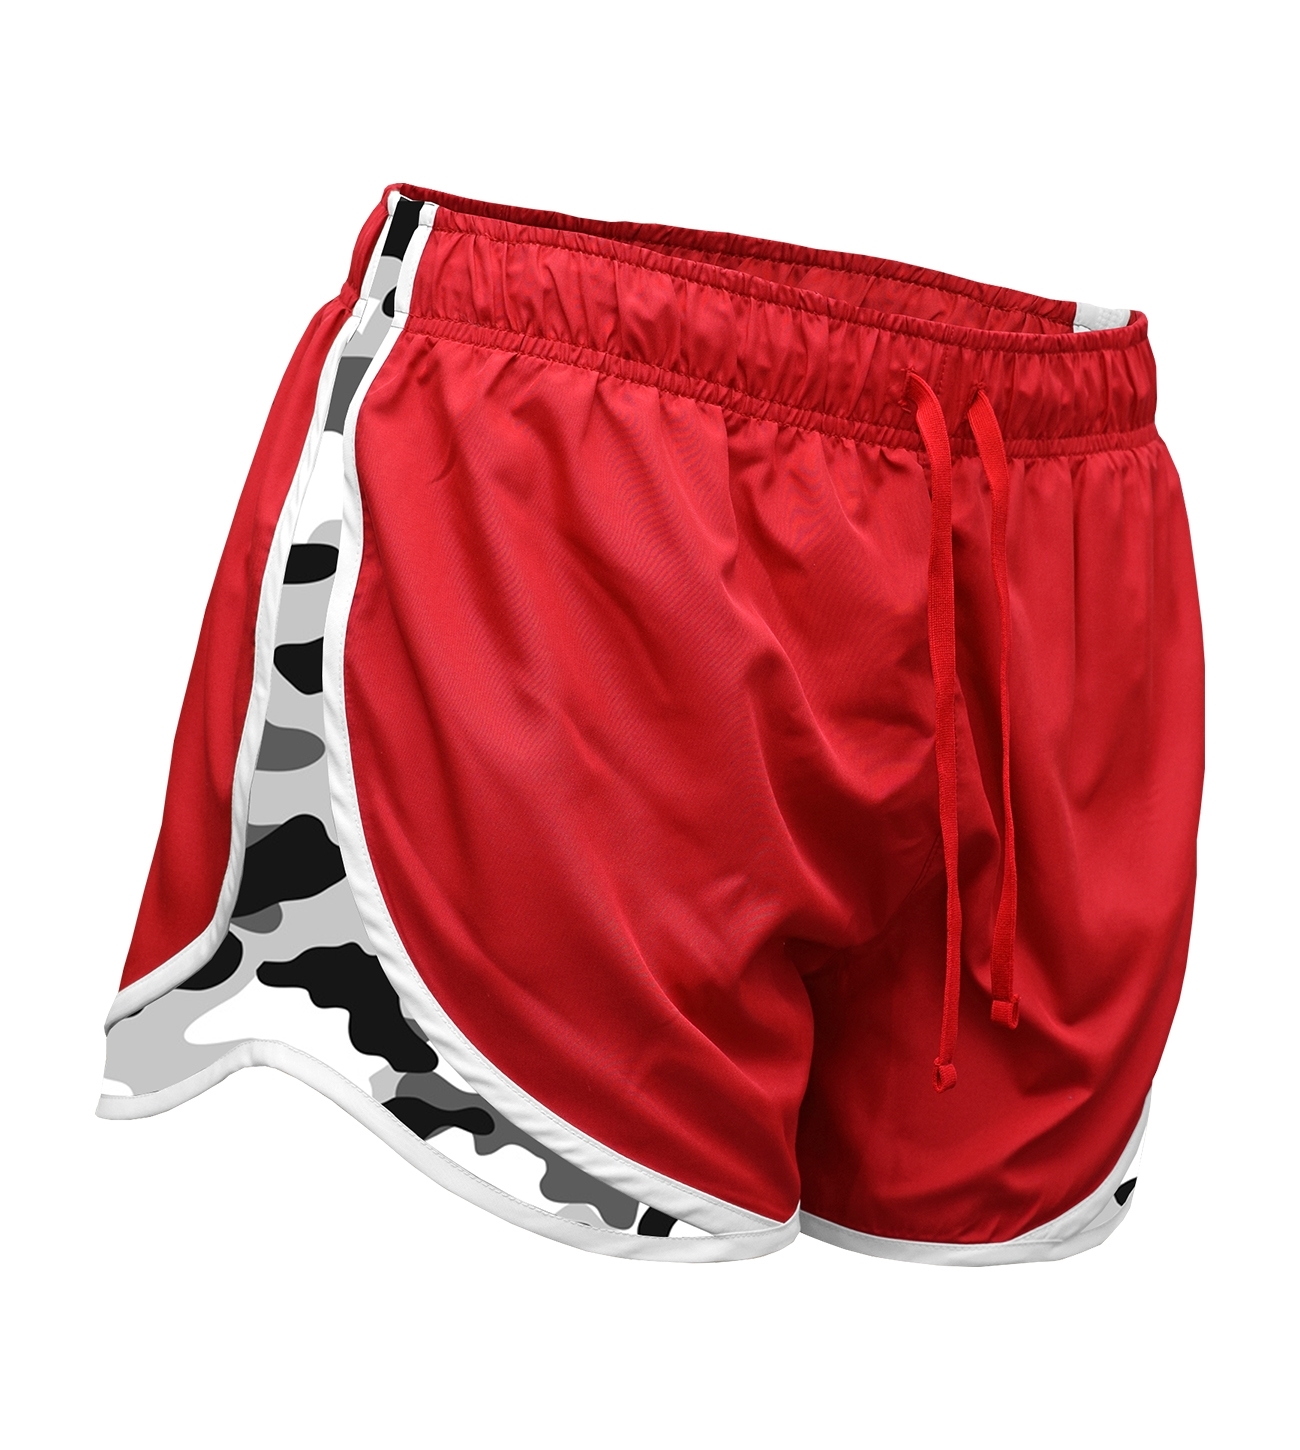 BAW Athletic Wear S701 - Ladies Running Short $12.34 - Women's Shorts